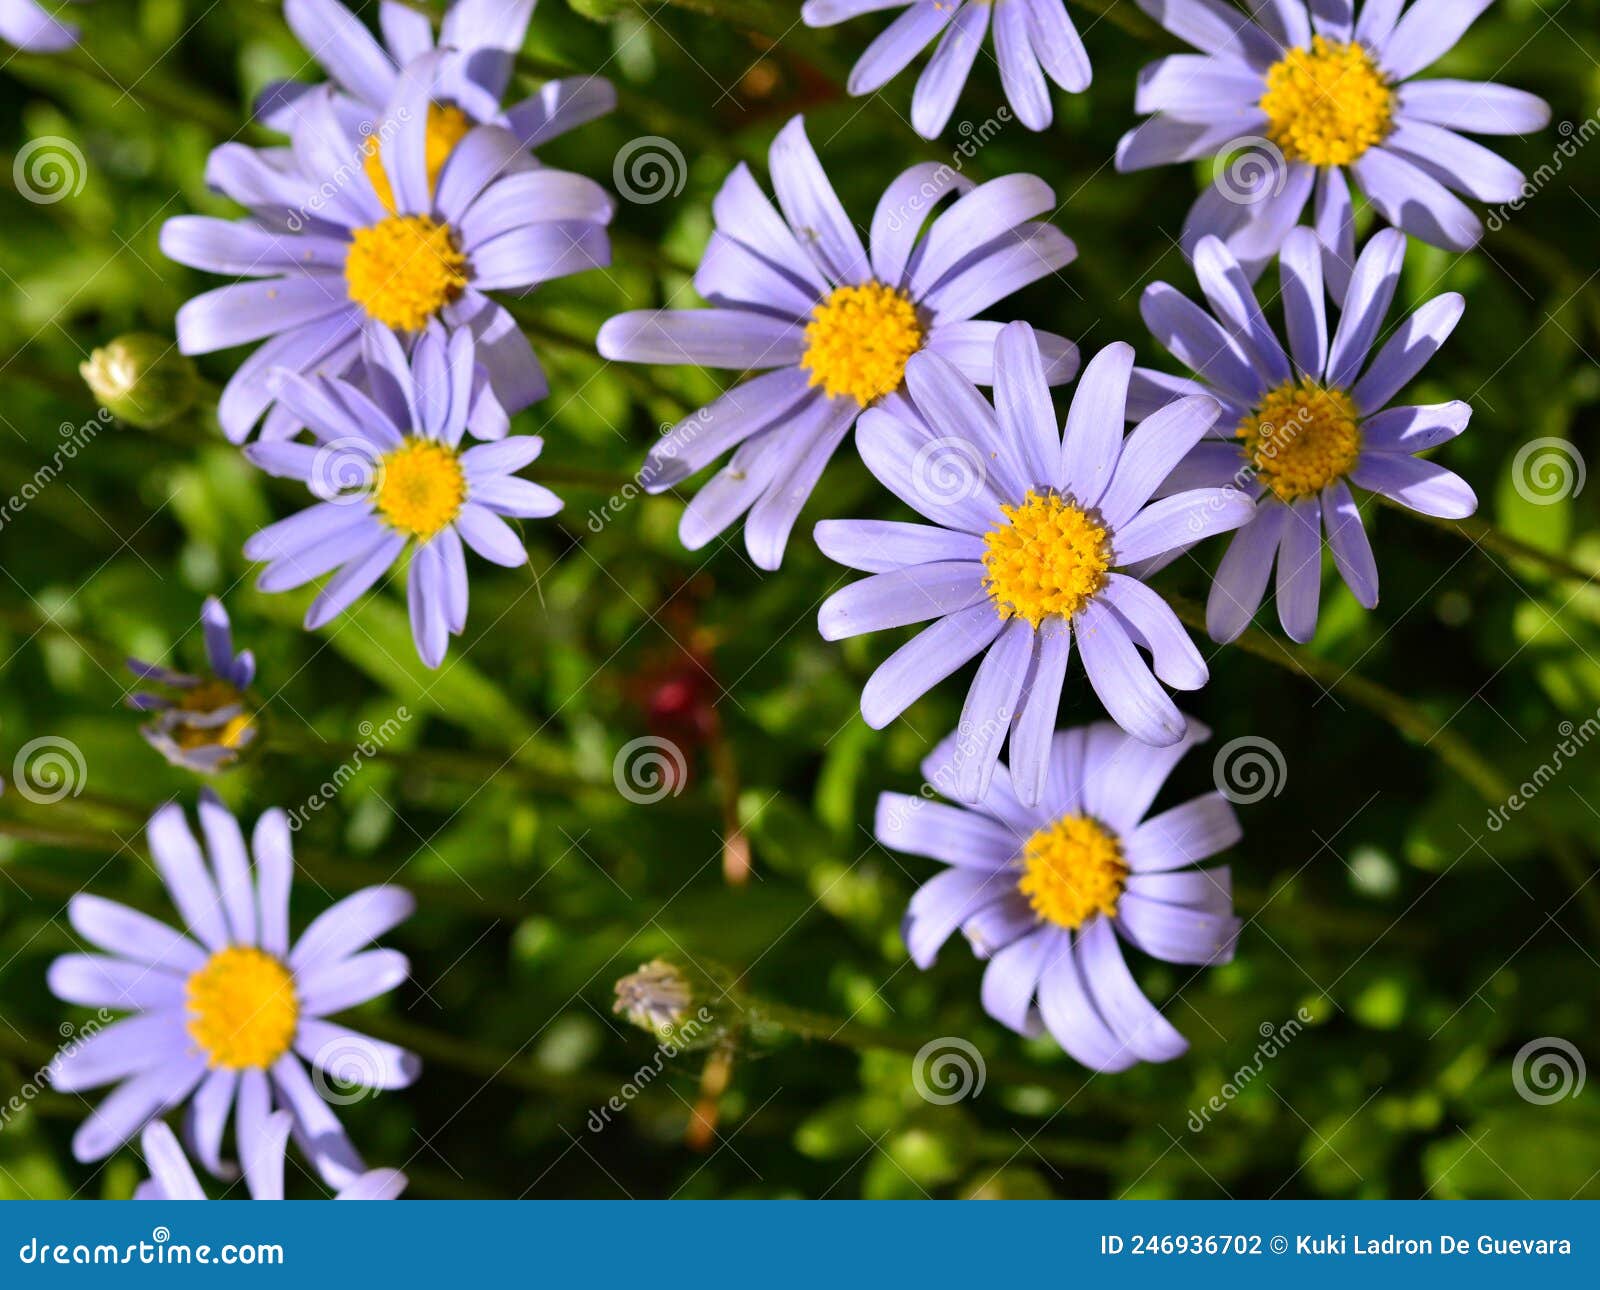 blue daisies, felicia amelloides, in spring